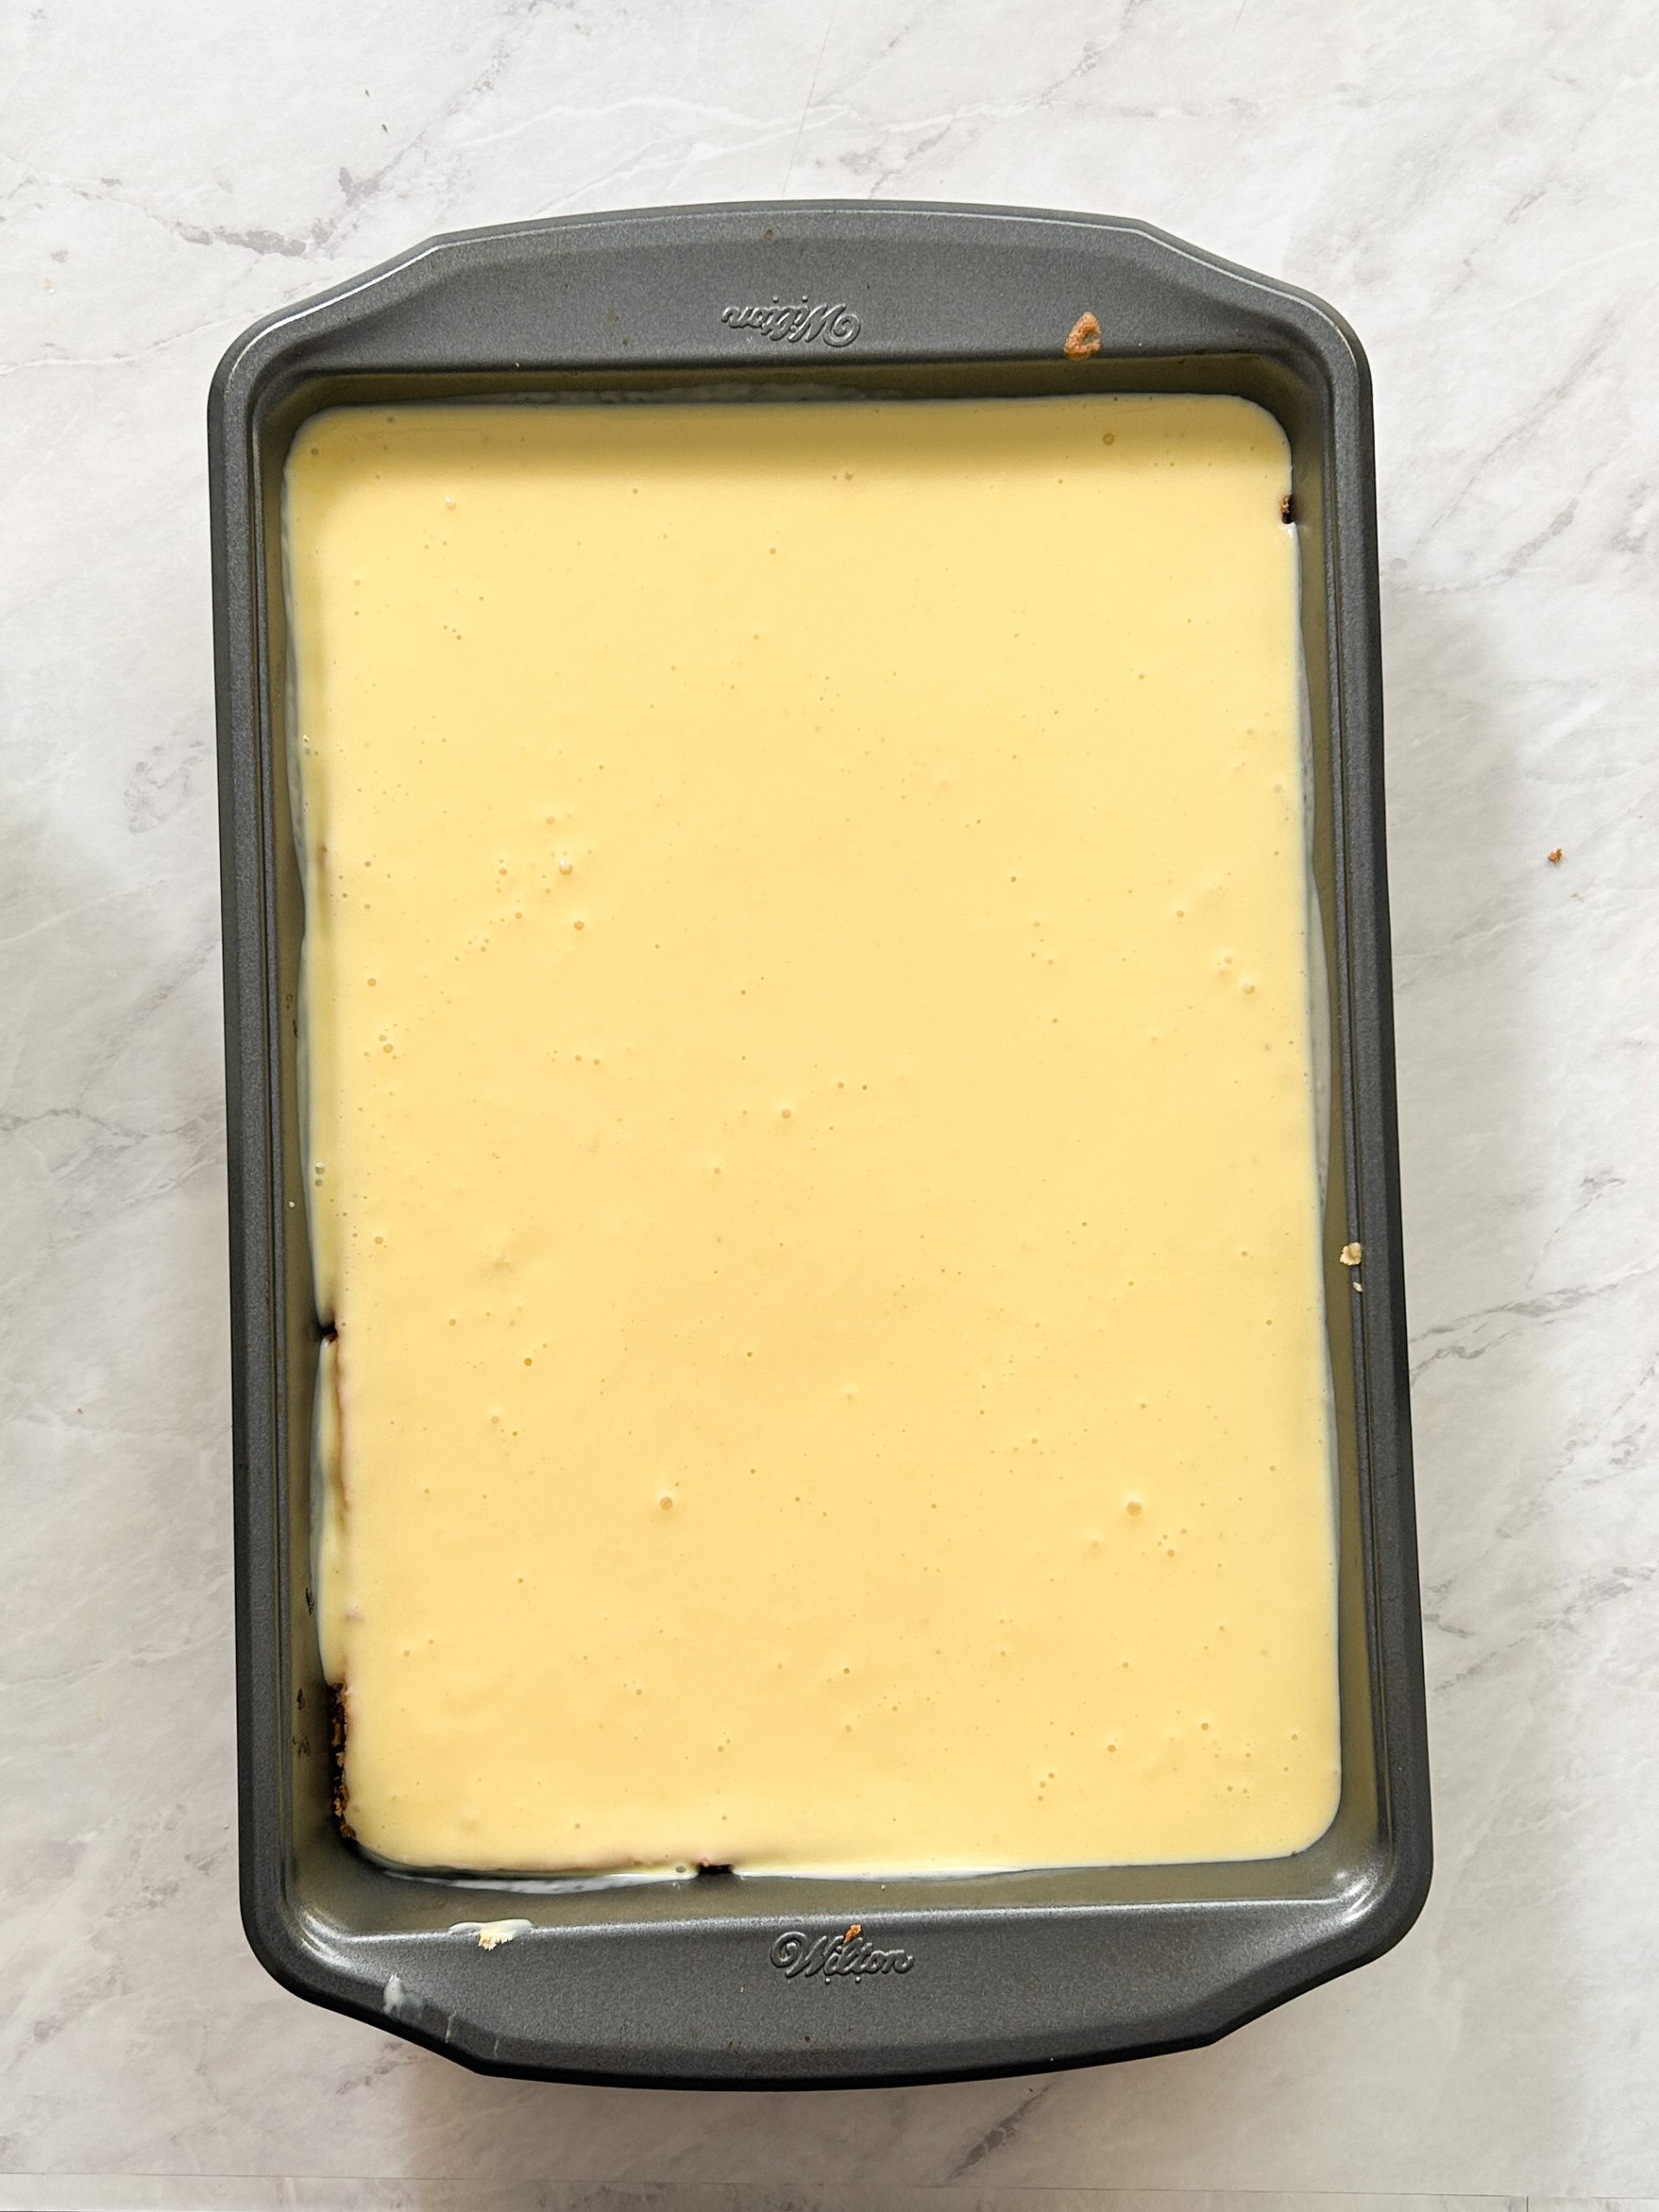 biscuit sponge cake drenched in mango three milk mixture